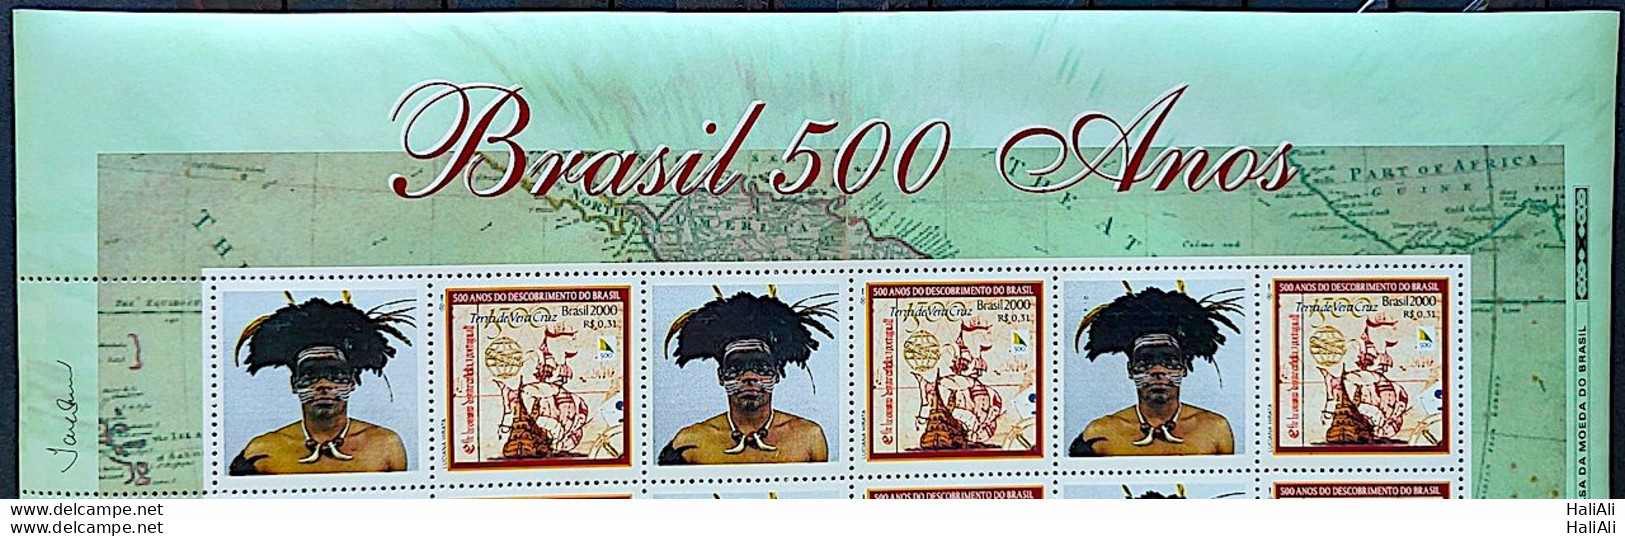 C 2254 Brazil Stamp Custom Discovery Of Brazil Indian Portugal 2000 3 Brazil Stamps Vignette Brasil 500 Years - Neufs